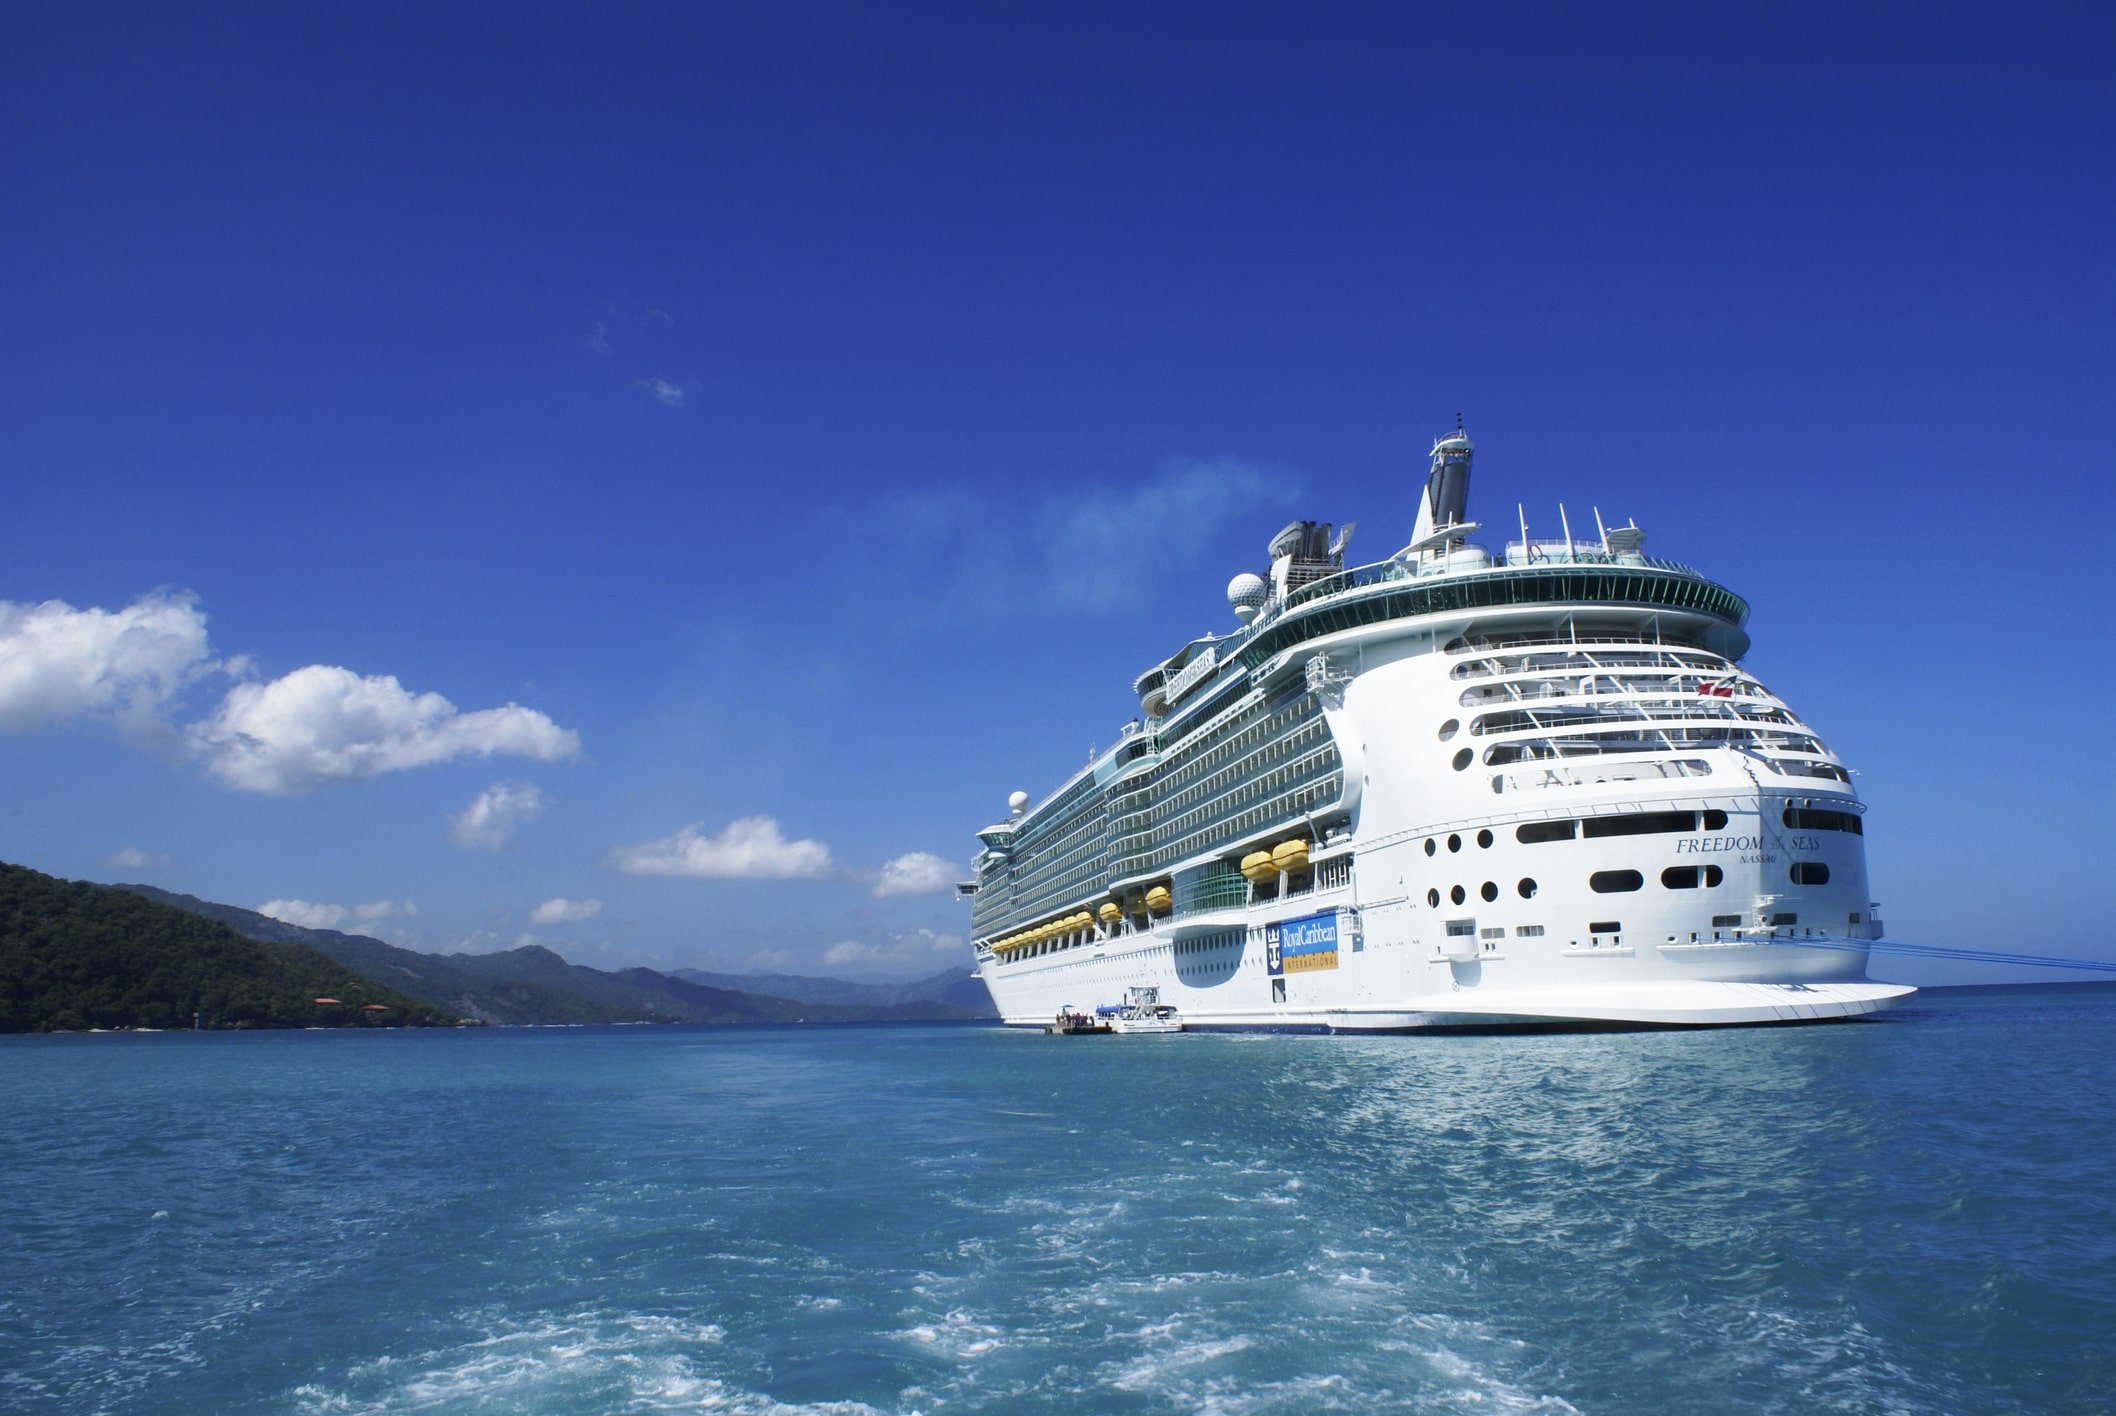 Royal Caribbean releases health protocols for first U.S. cruise ship sailing | Royal Caribbean Blog